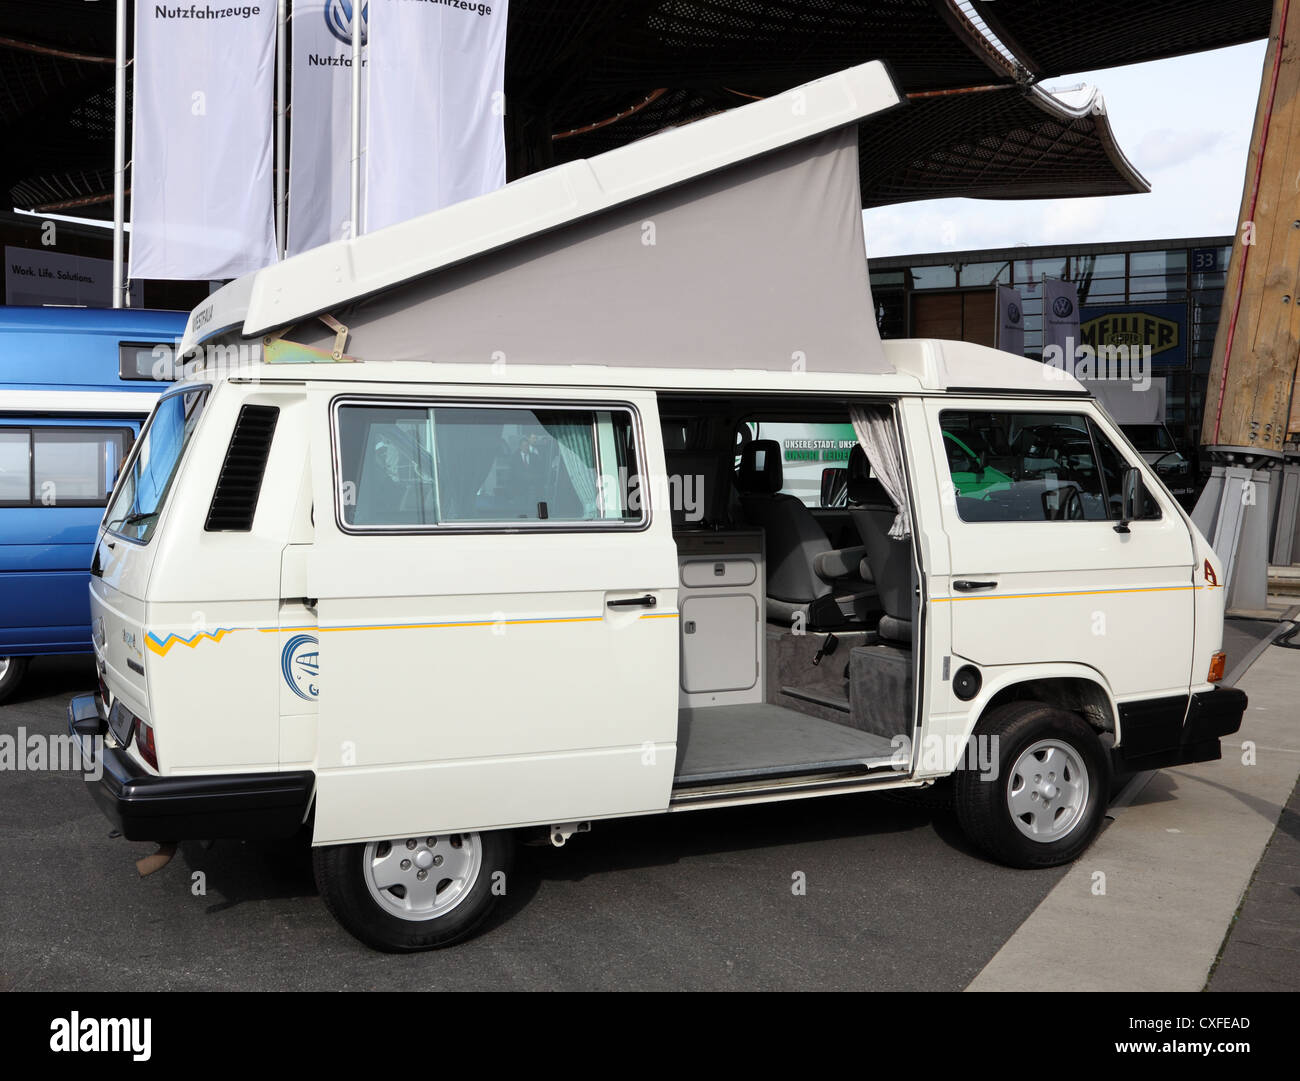 Volkswagen westfalia camper hi-res stock photography and images - Alamy